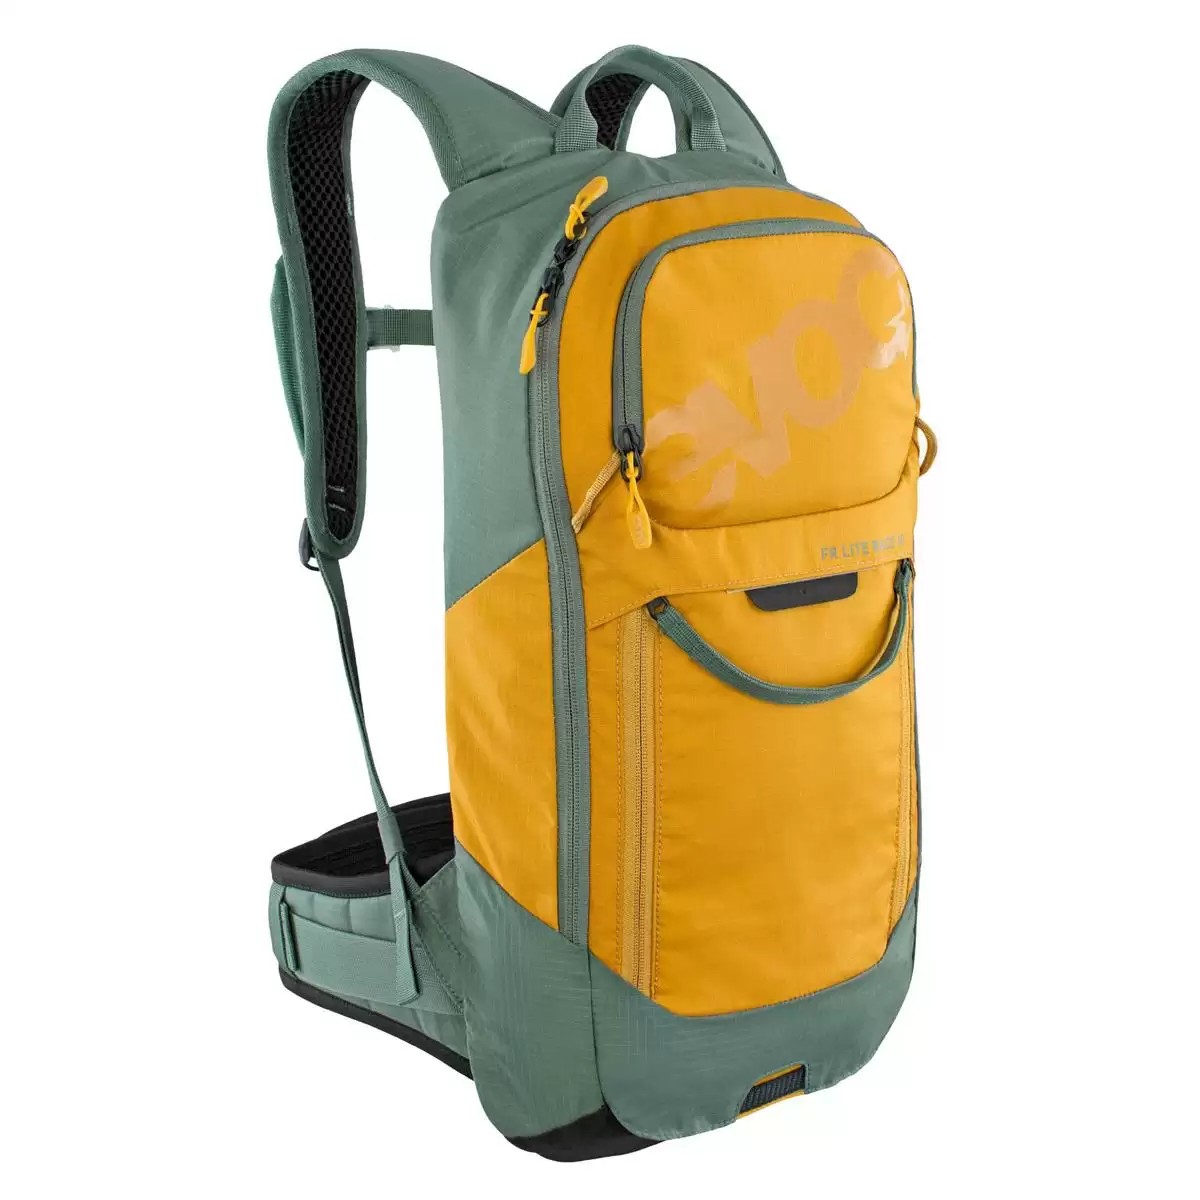 FR LITE RACE 10 Backpack With Back Protector 10L Green/Orange Size M/L - image